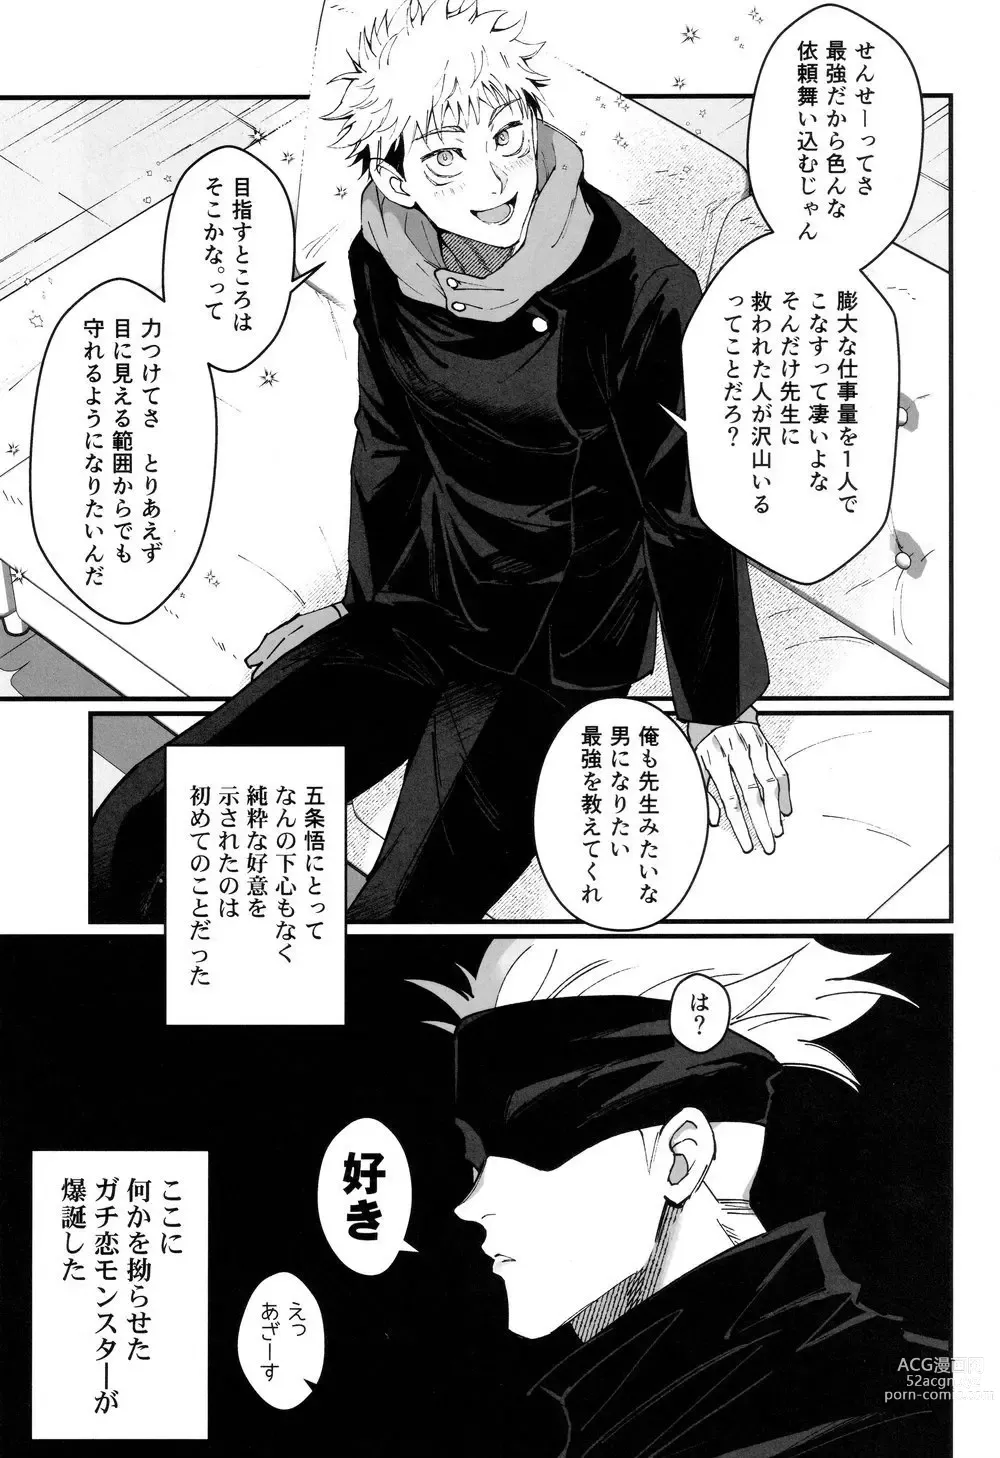 Page 5 of doujinshi Gachikoi Monster